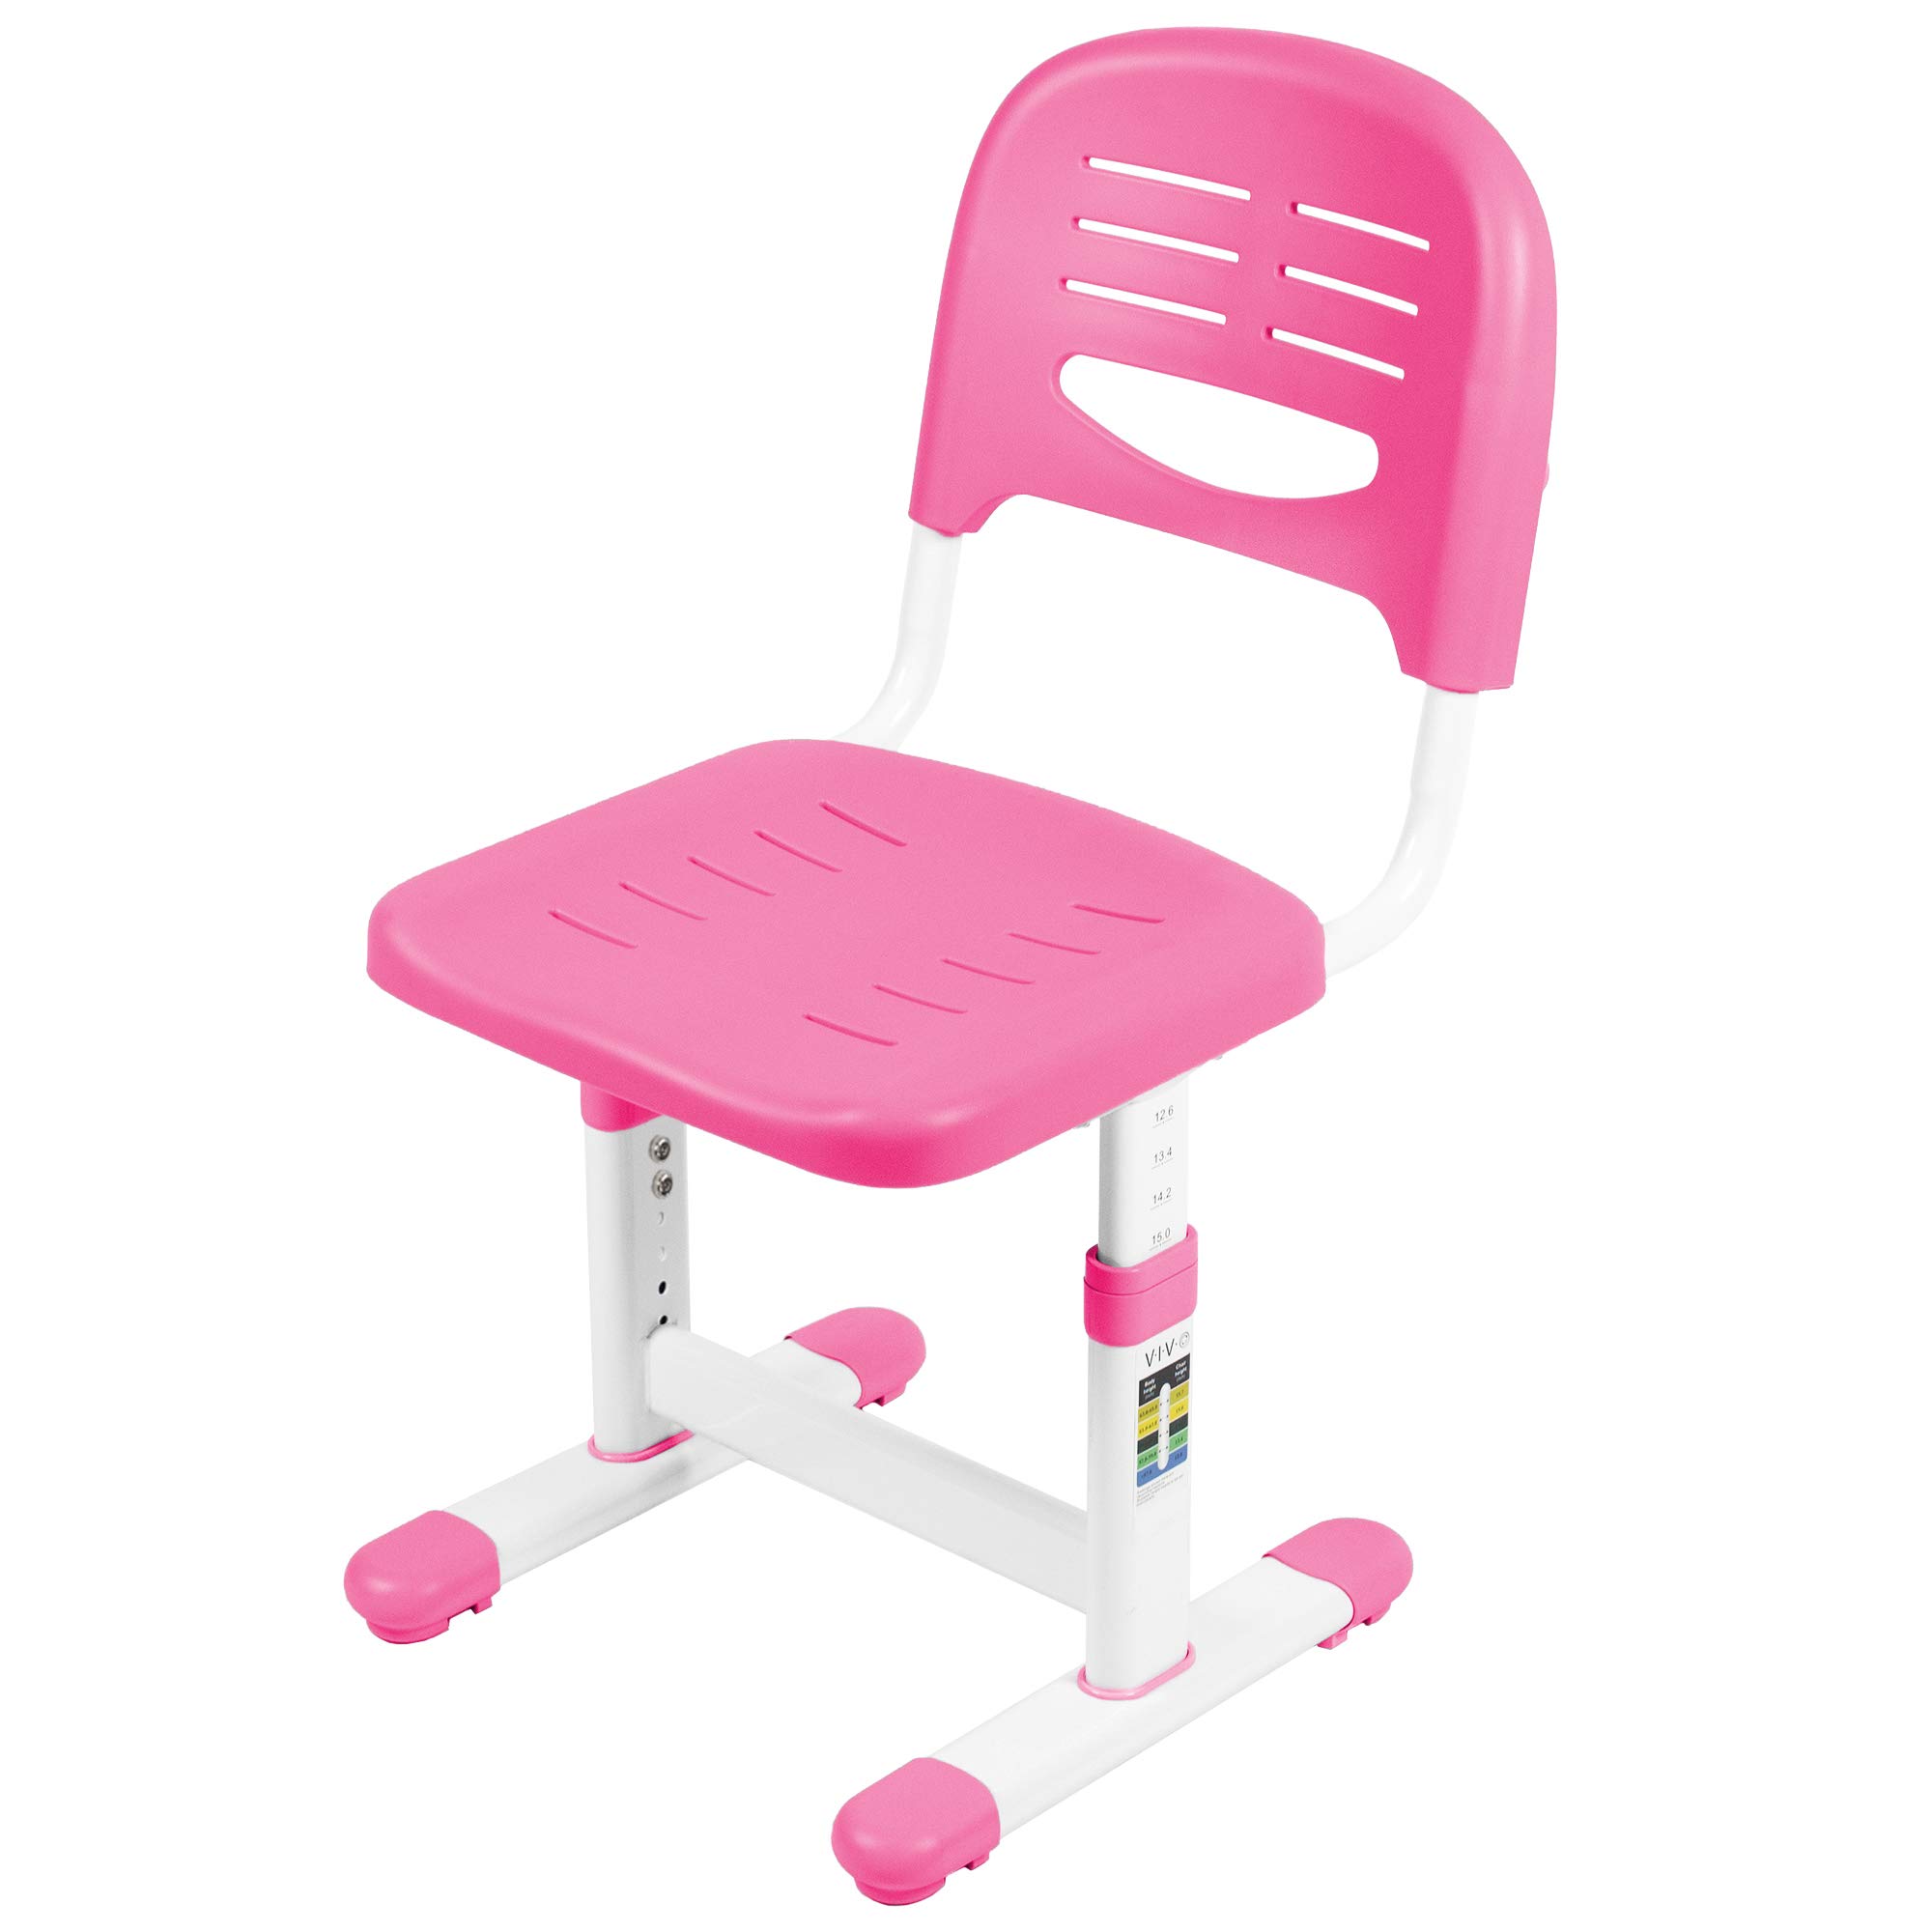 VIVO Height Adjustable Kids Desk Chair, Chair Only, Designed for Interactive Workstation, Universal Children's Ergonomic Seat, Pink, DESK-V201P-CH